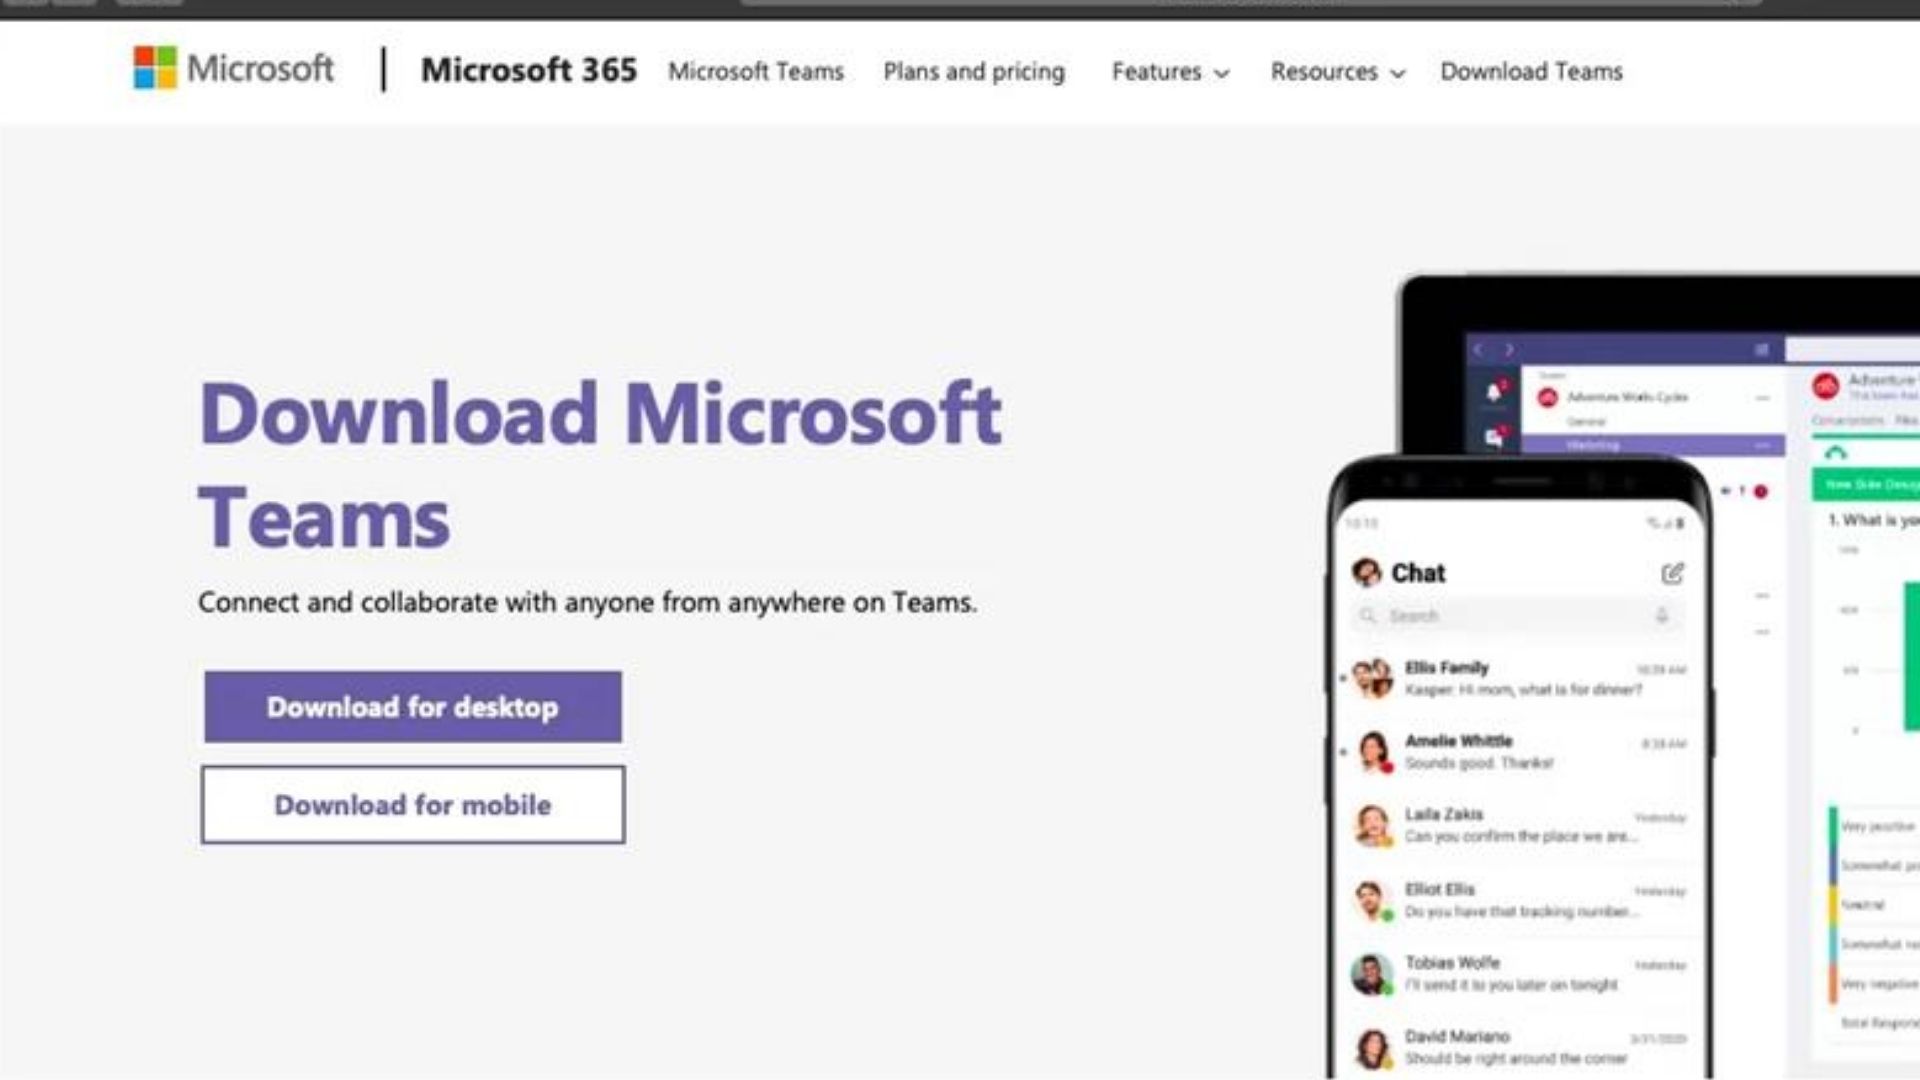 Download the Microsoft Teams app